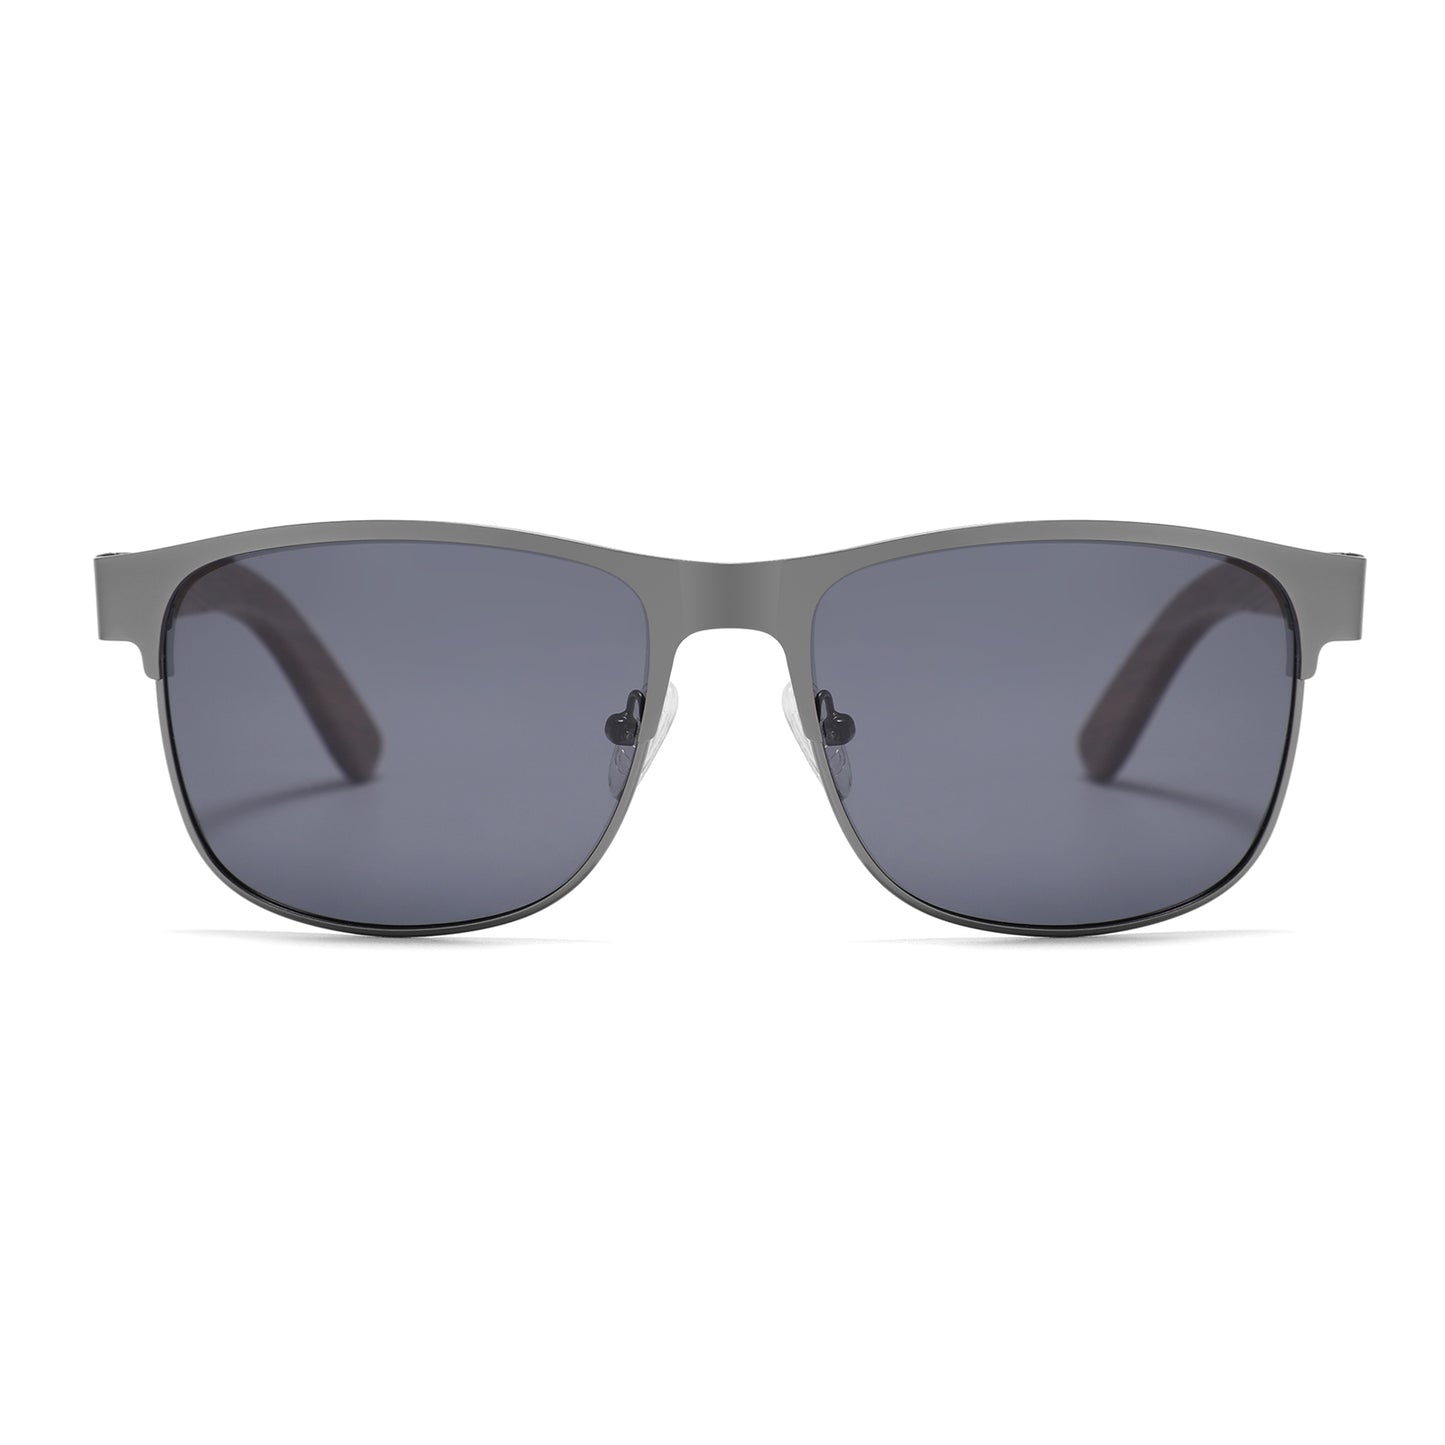 HOLLYWOOD DARK SILVER Men's Sunglasses Grey Polarised Lens Wooden Arms